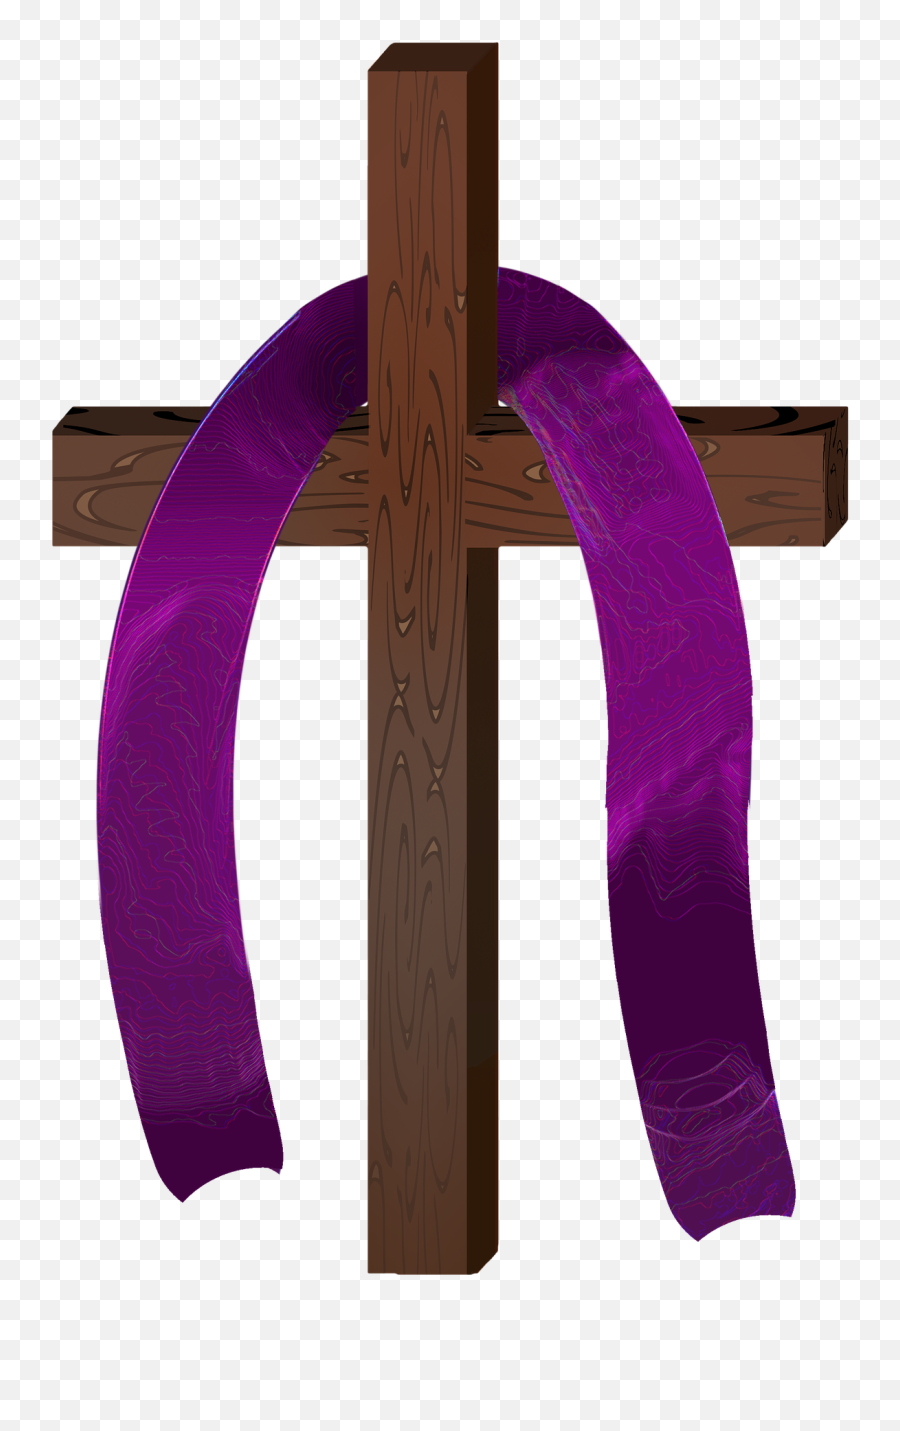 February 2020 Pastor Bob Mink - Holy Week Violet Cross Emoji,Christian Cross Emoticon